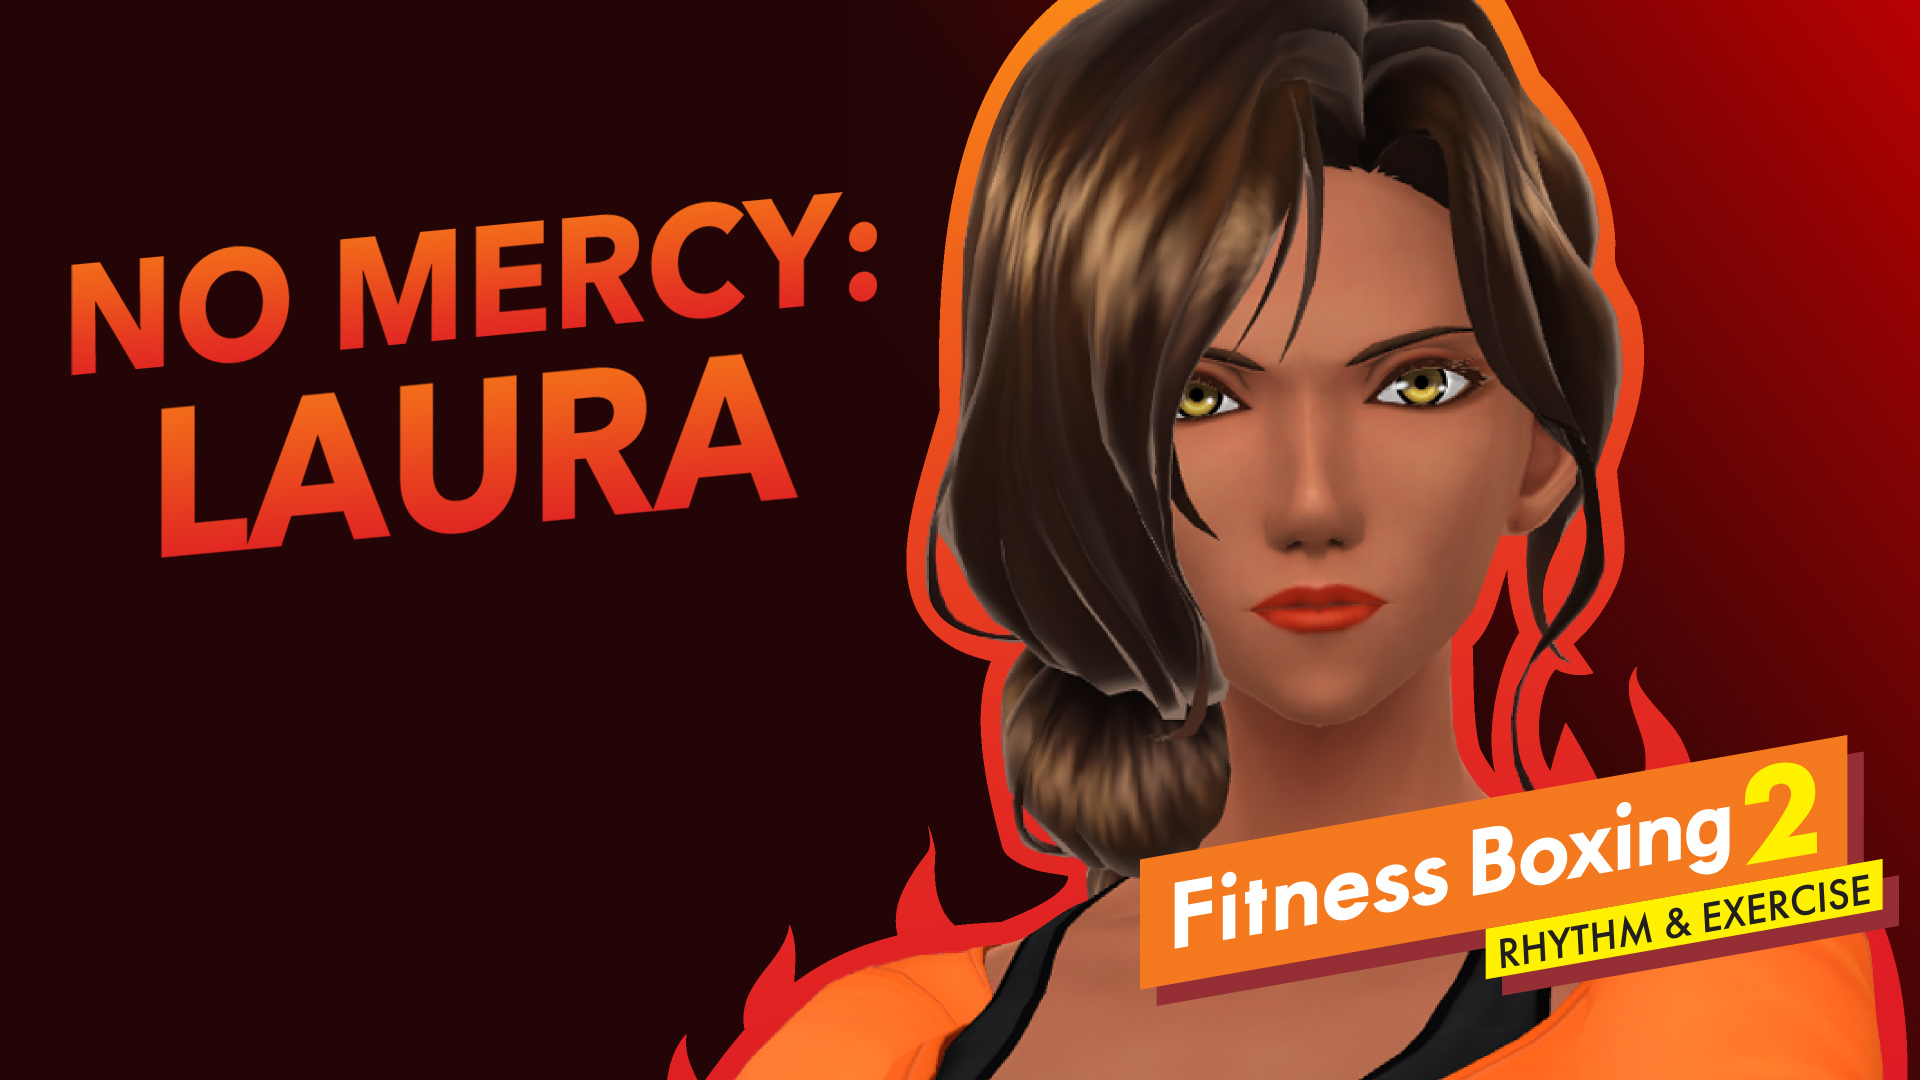 No Mercy: Laura